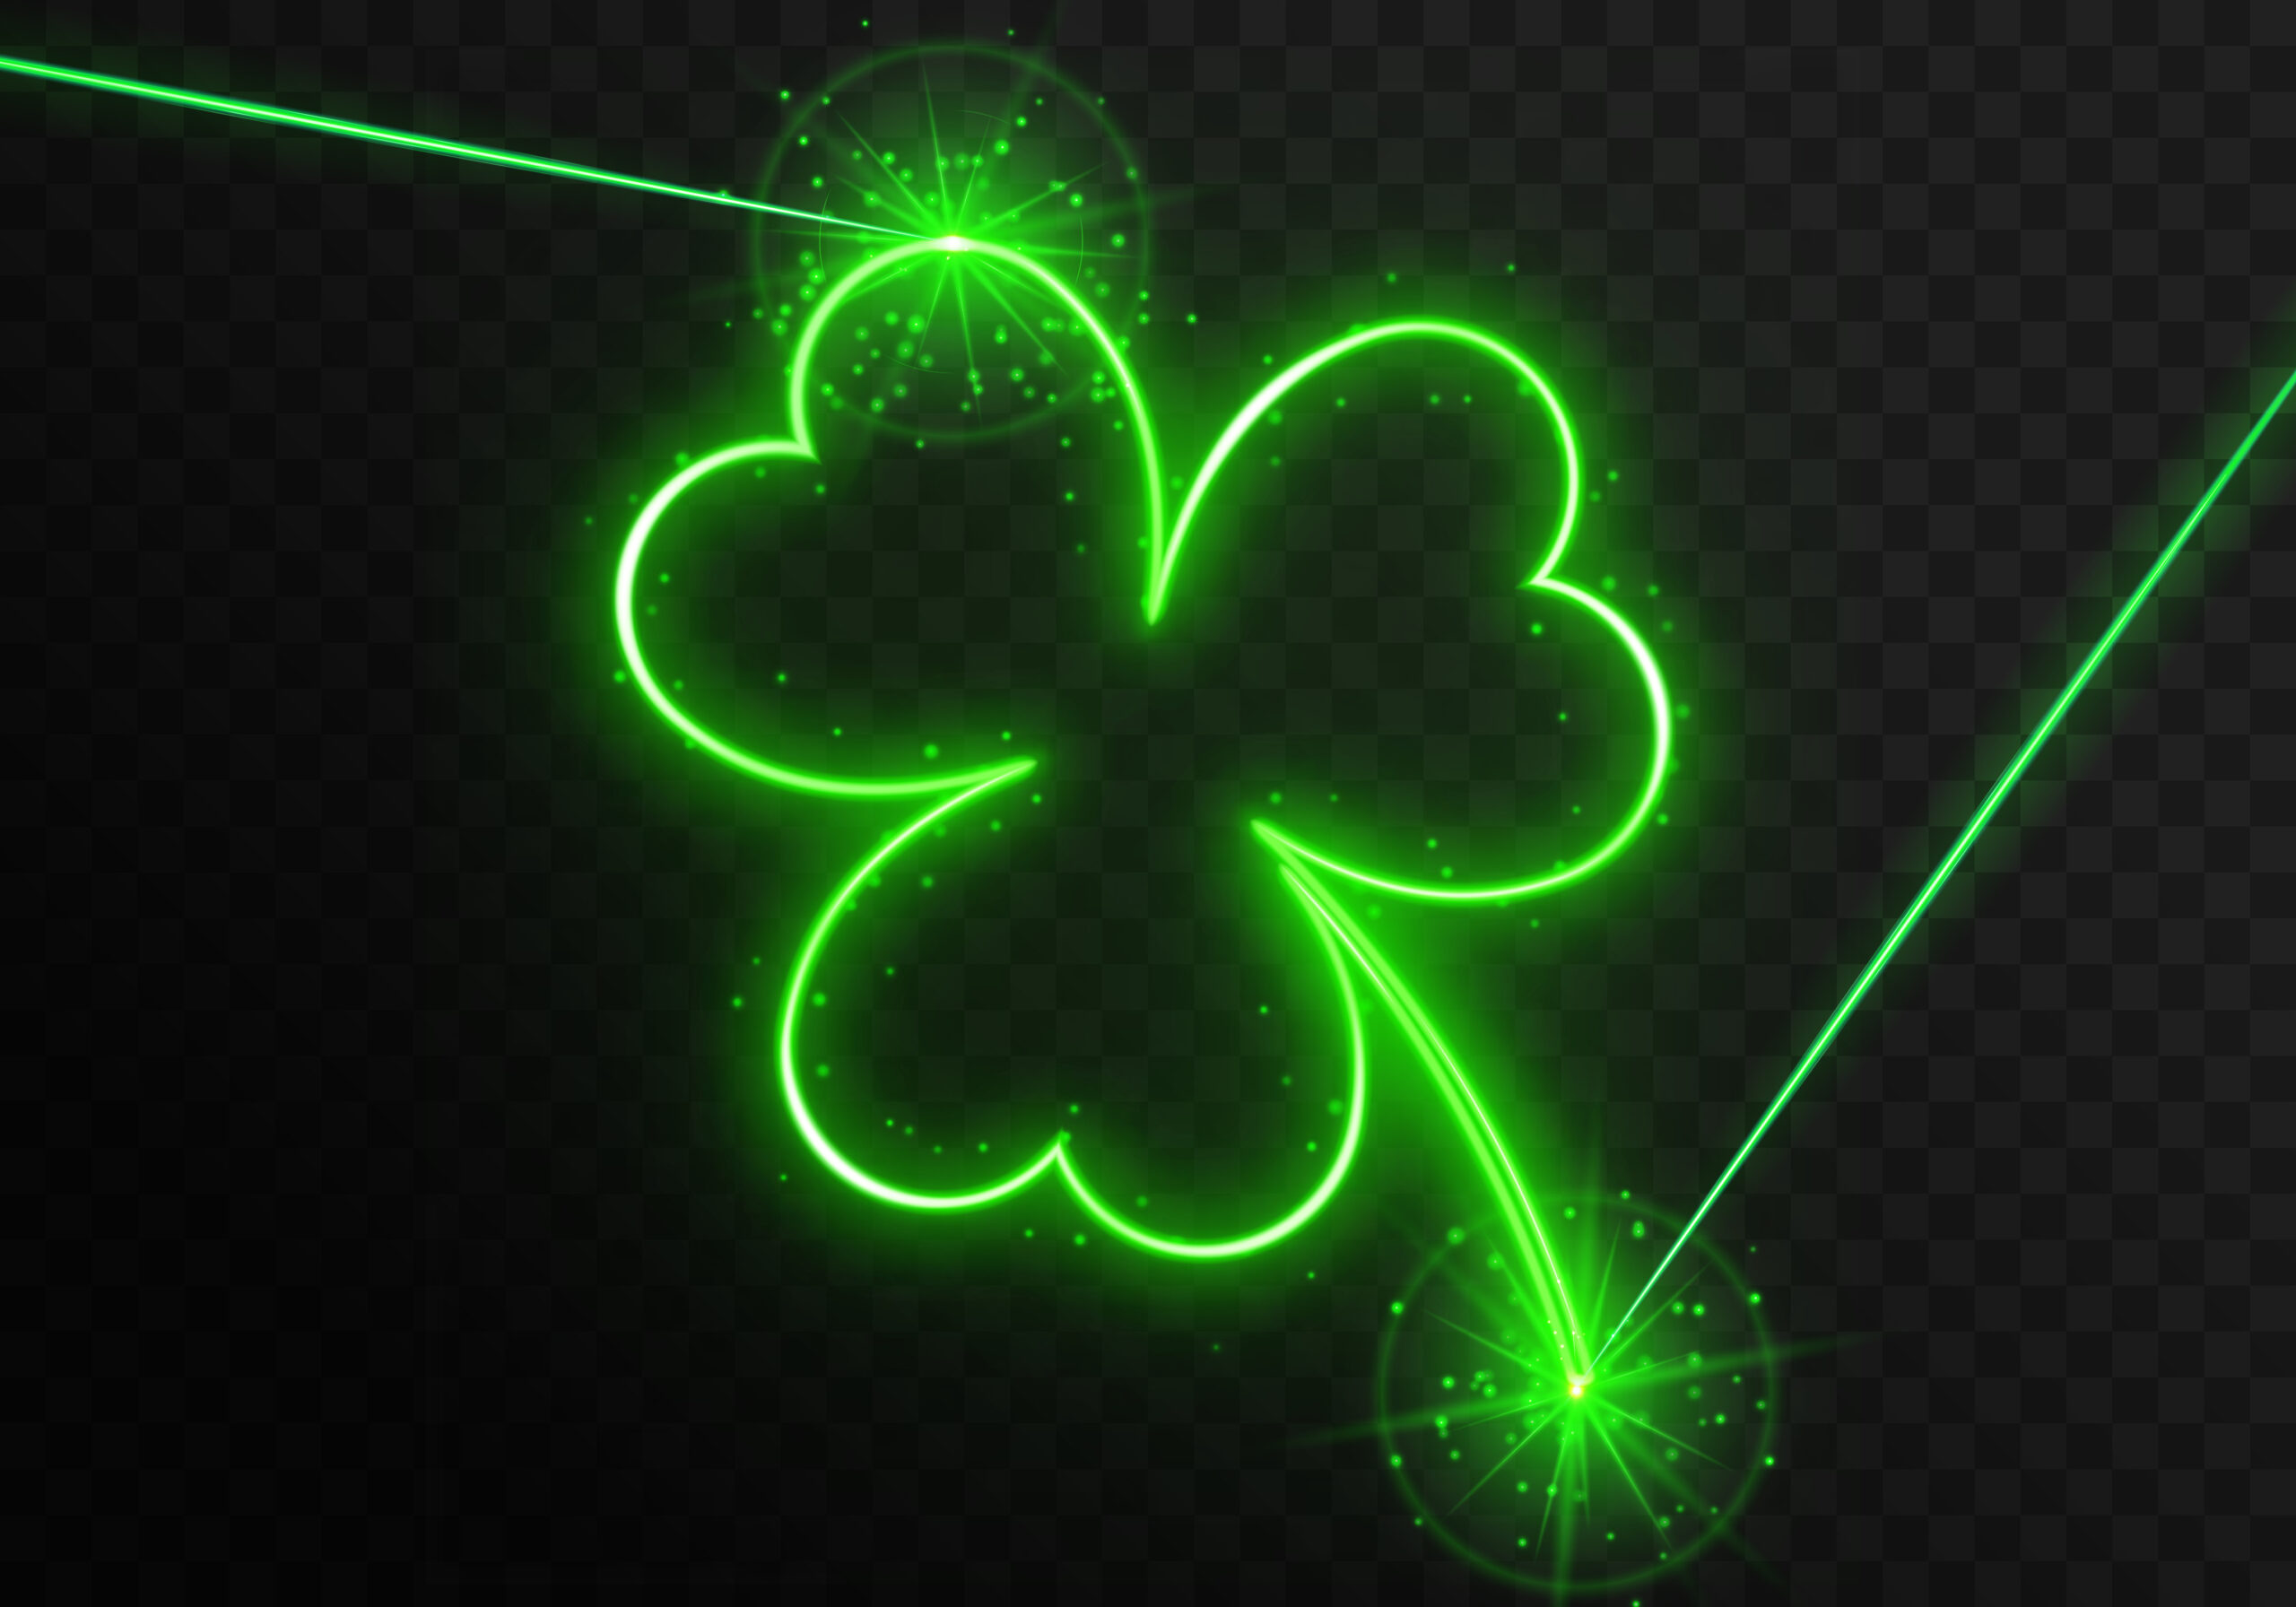 green laser pointer makes a three-leaf clover